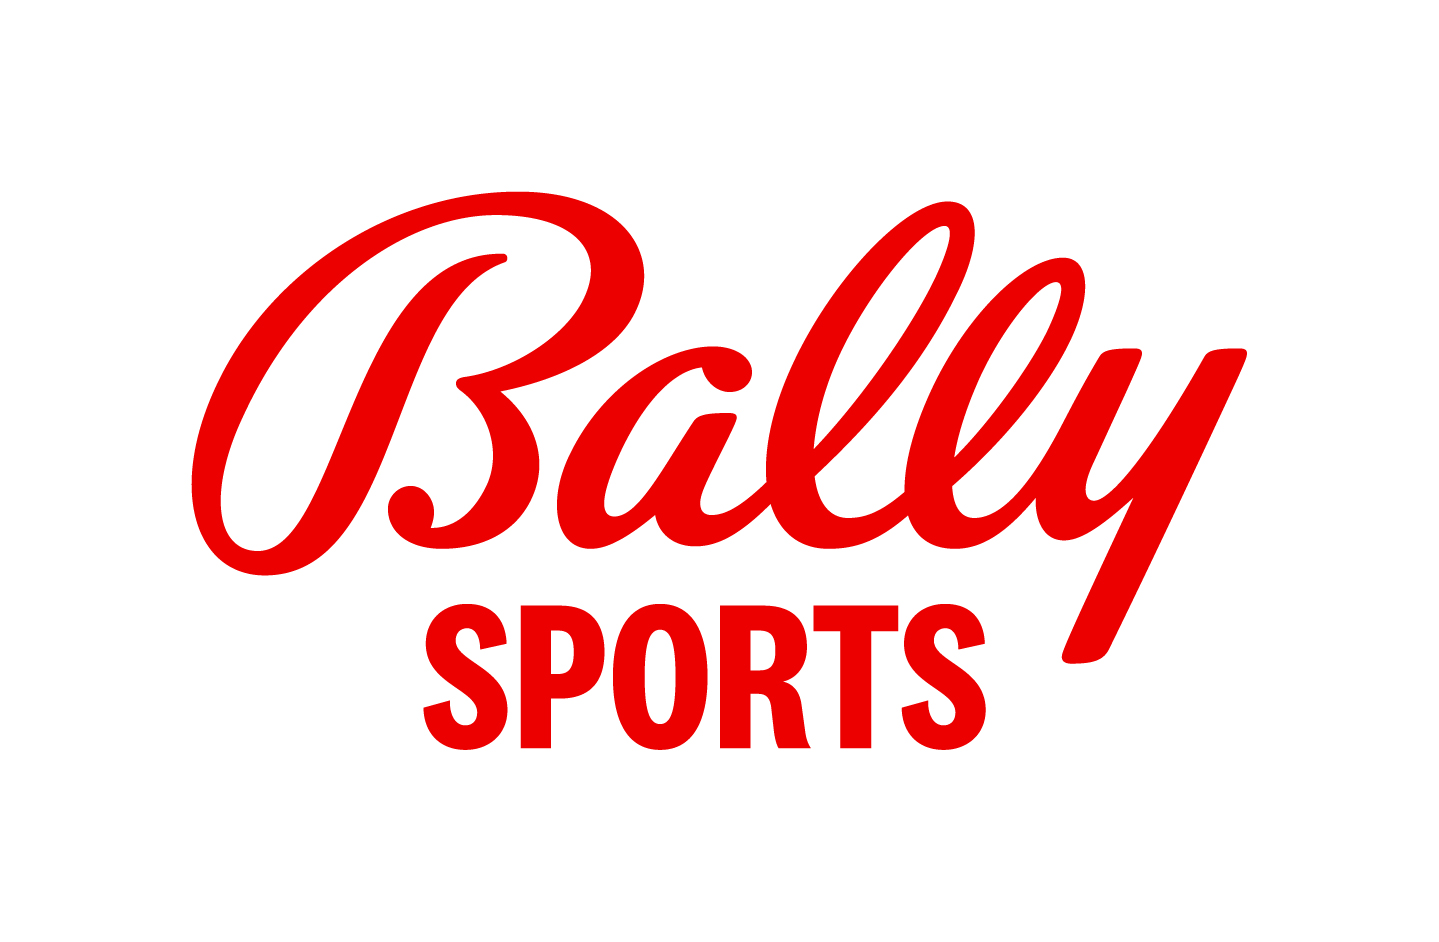 Bally Sports